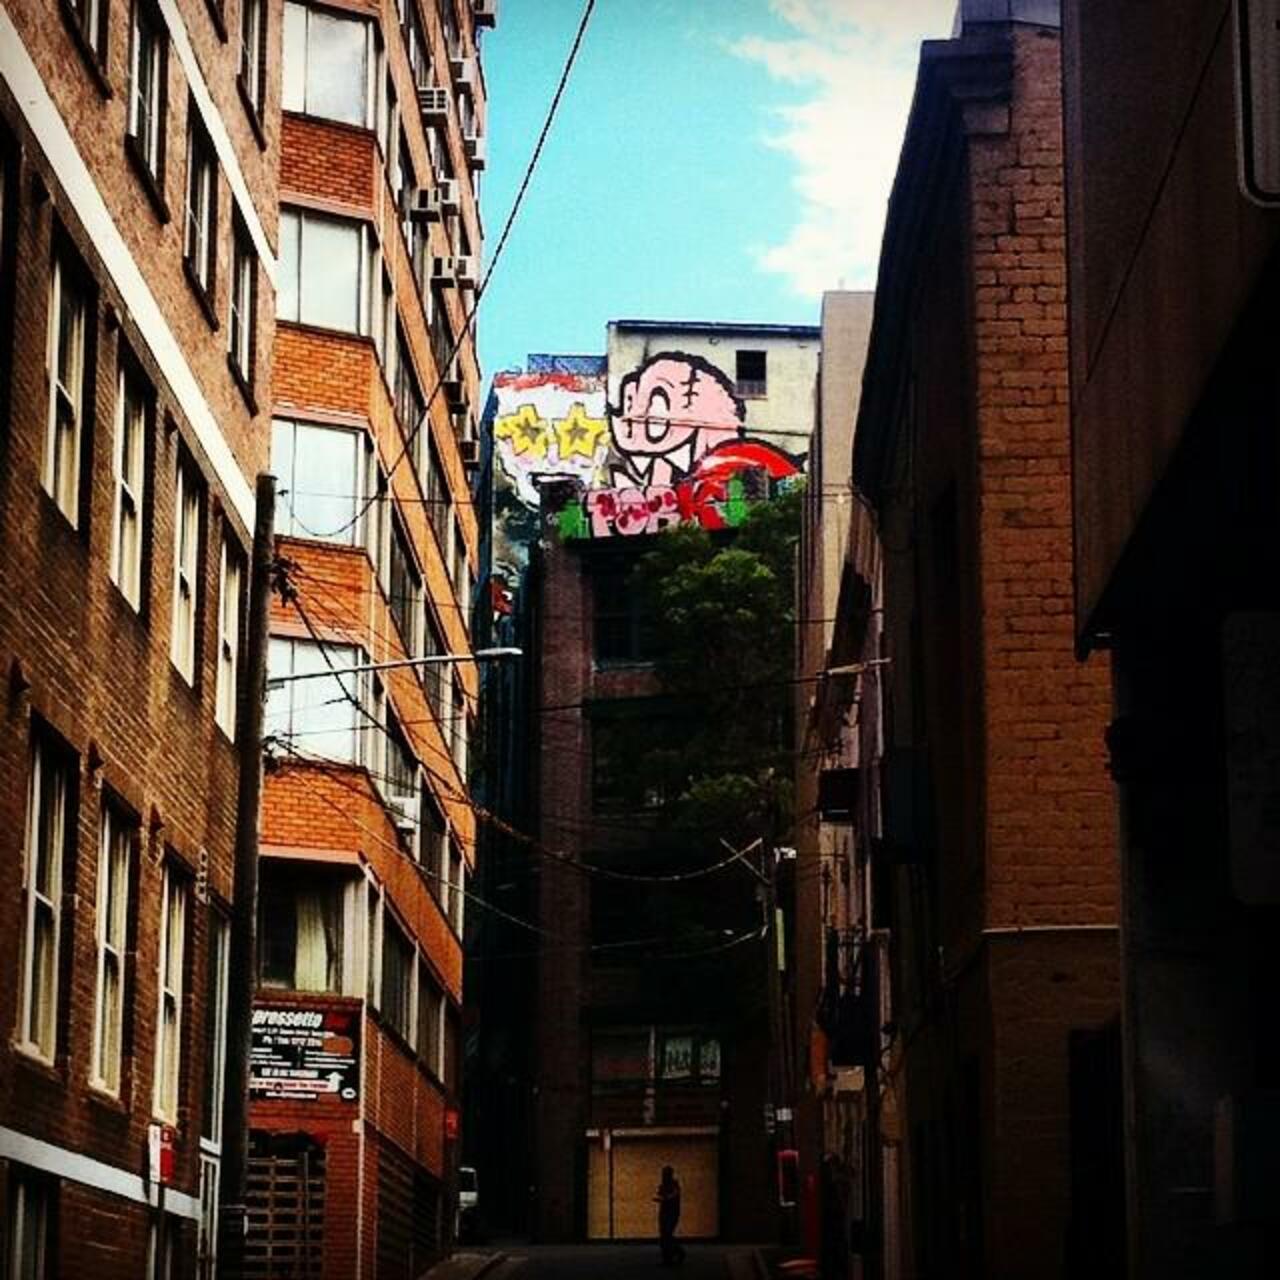 From such great heights #surryhills #sydney #streetart #highrise #graffiti #streetartsydney #art #alleyways by 365d… http://t.co/6USwVzTGJb